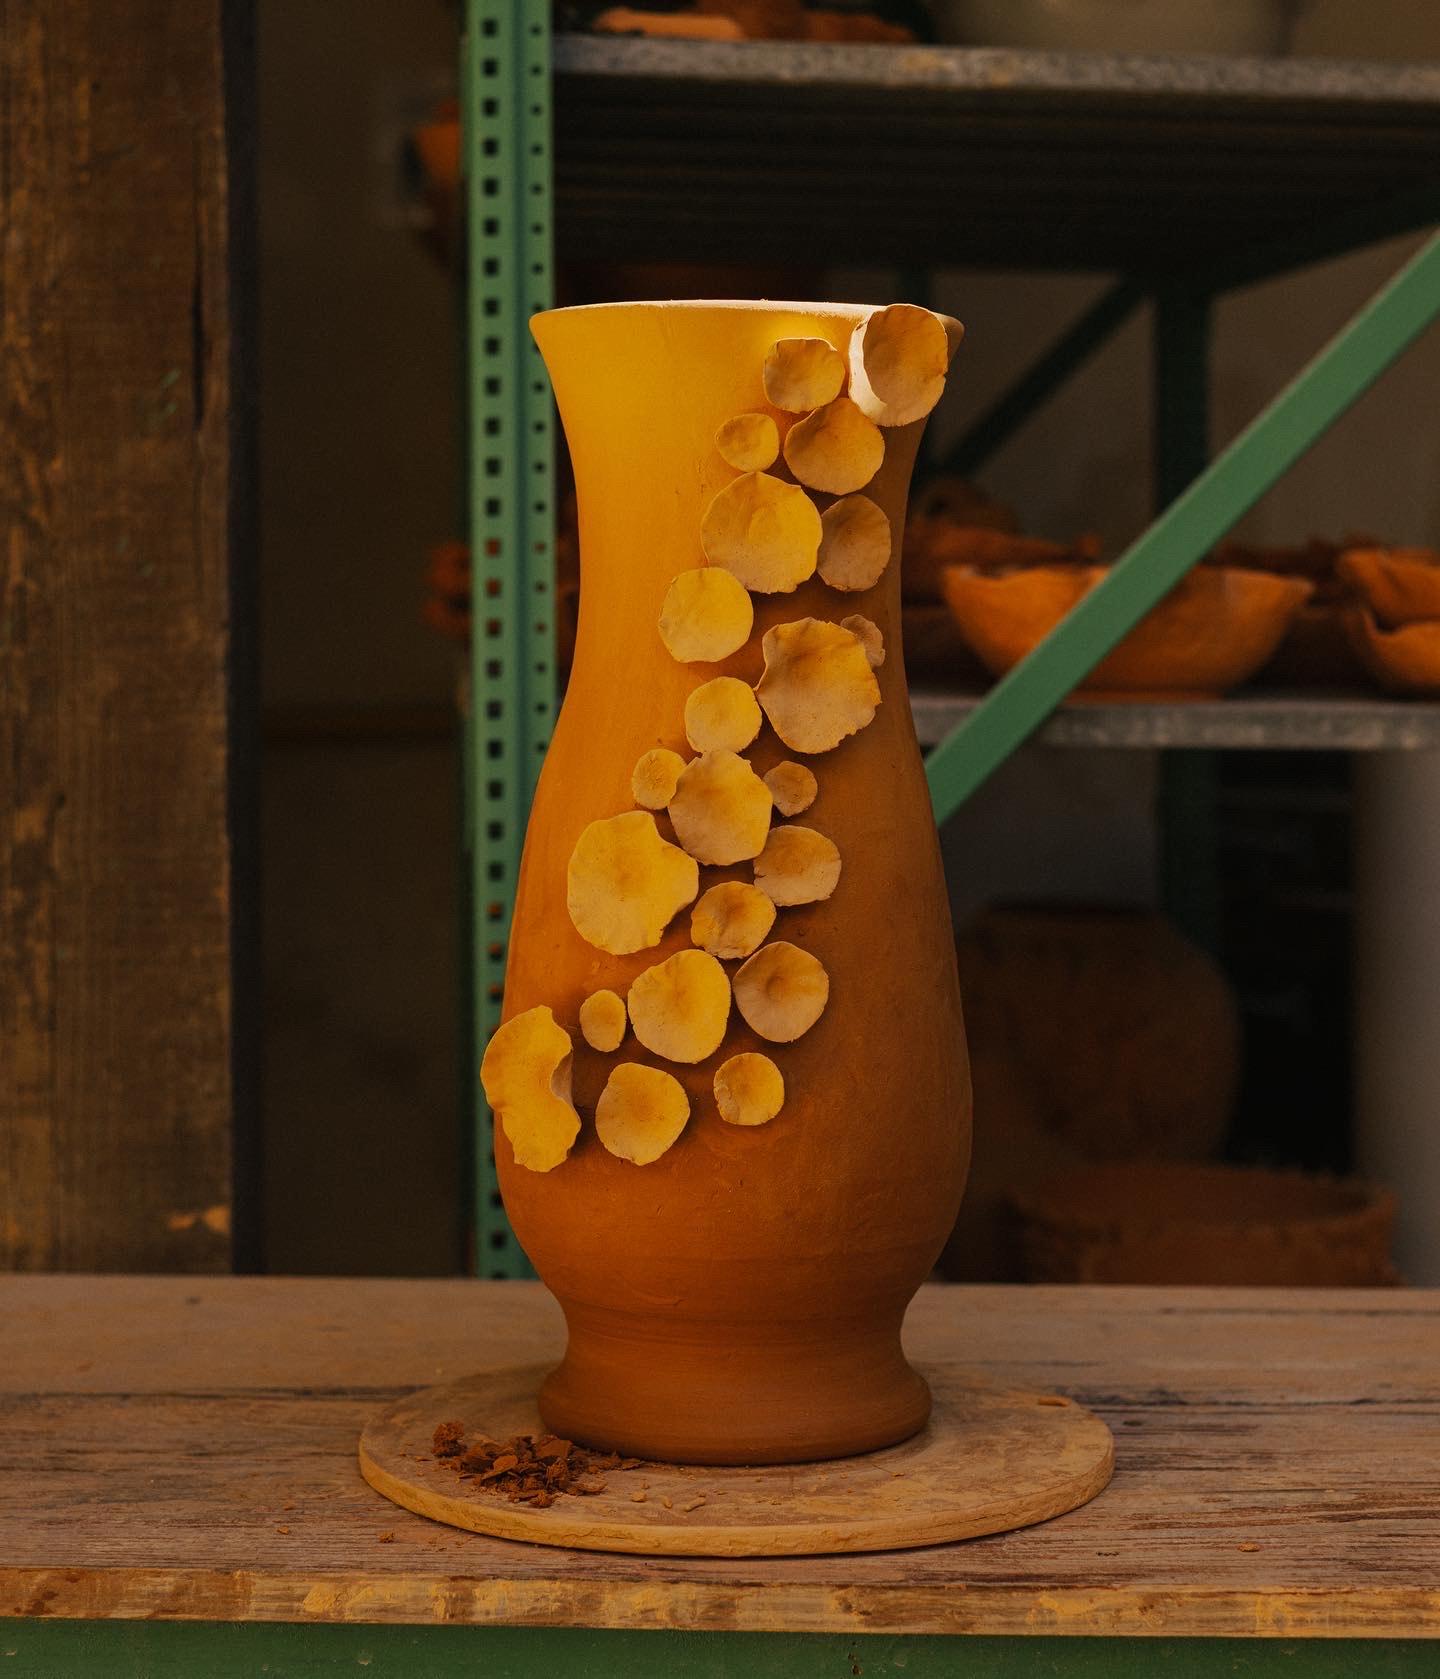 Mushroom flower vase by Casa Alfarera
Dimensions: D20 x H50.8 cm
Materials: Stoneware, Mixed Glazes.

Casa Alfarera Santo Domingo is a stoneware workshop located in the Colonial City of Santo Domingo, Dominican Republic. It was founded in 2013 by